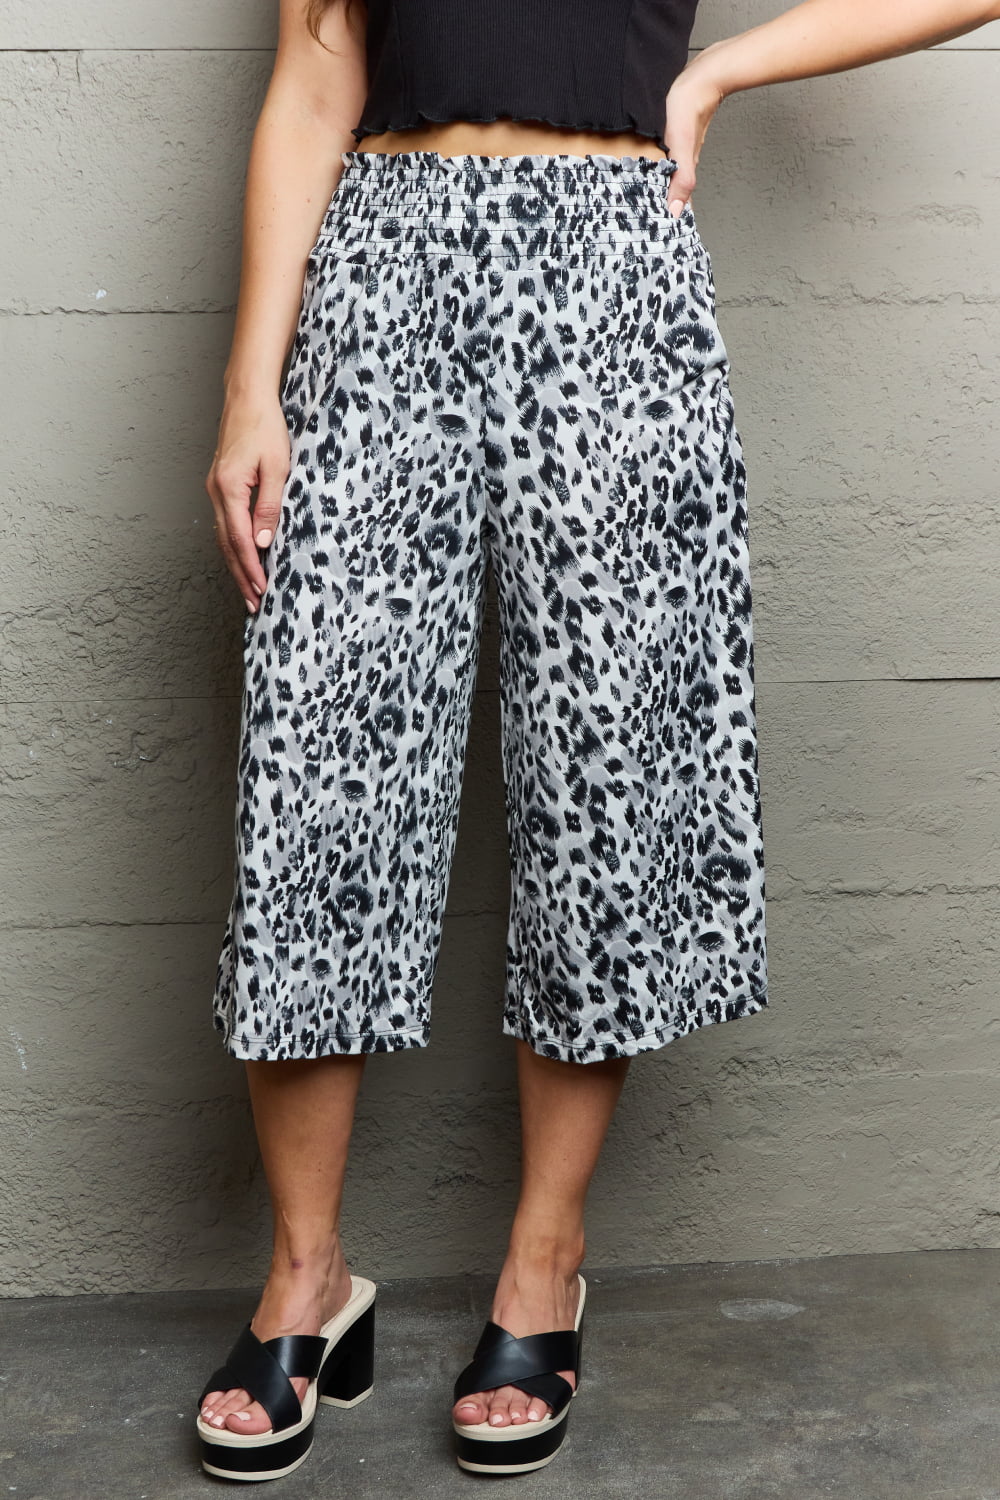 Ninexis Leopard High Waist Flowy Wide Leg Pants with Pockets - Make'm Blush Boutique 